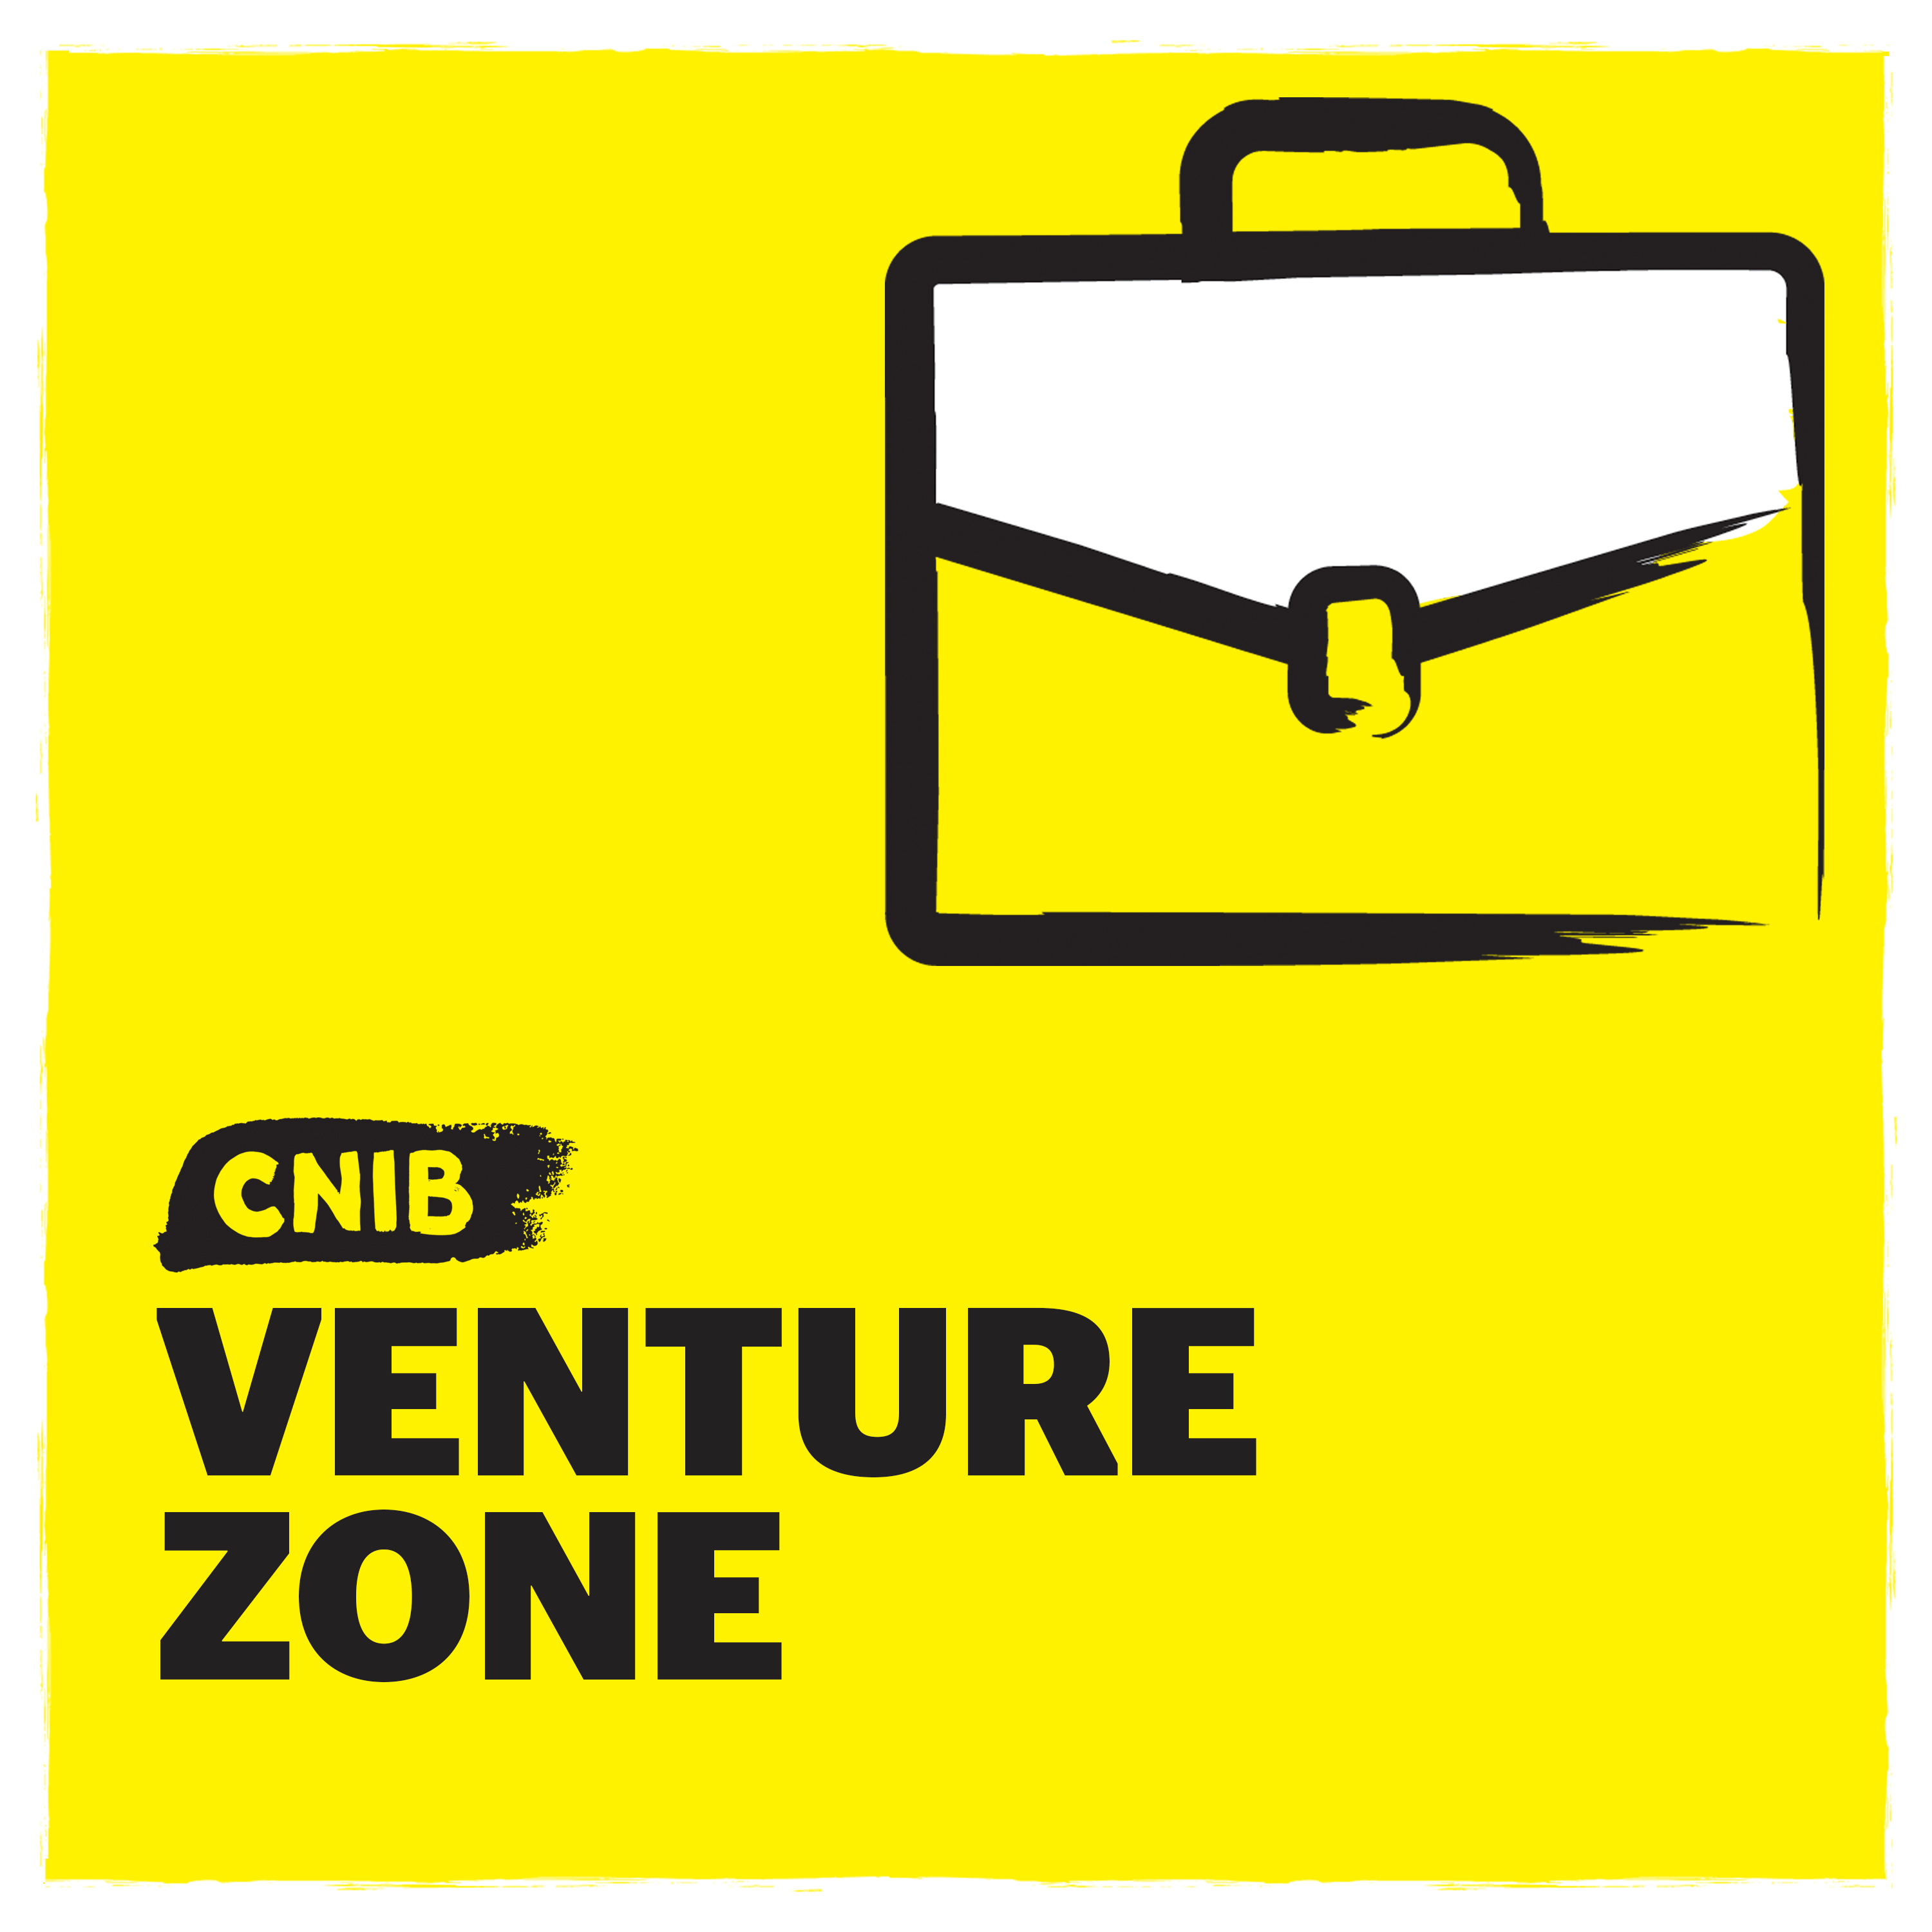 "CNIB Venture Zone" with breifcase icon on yellow.